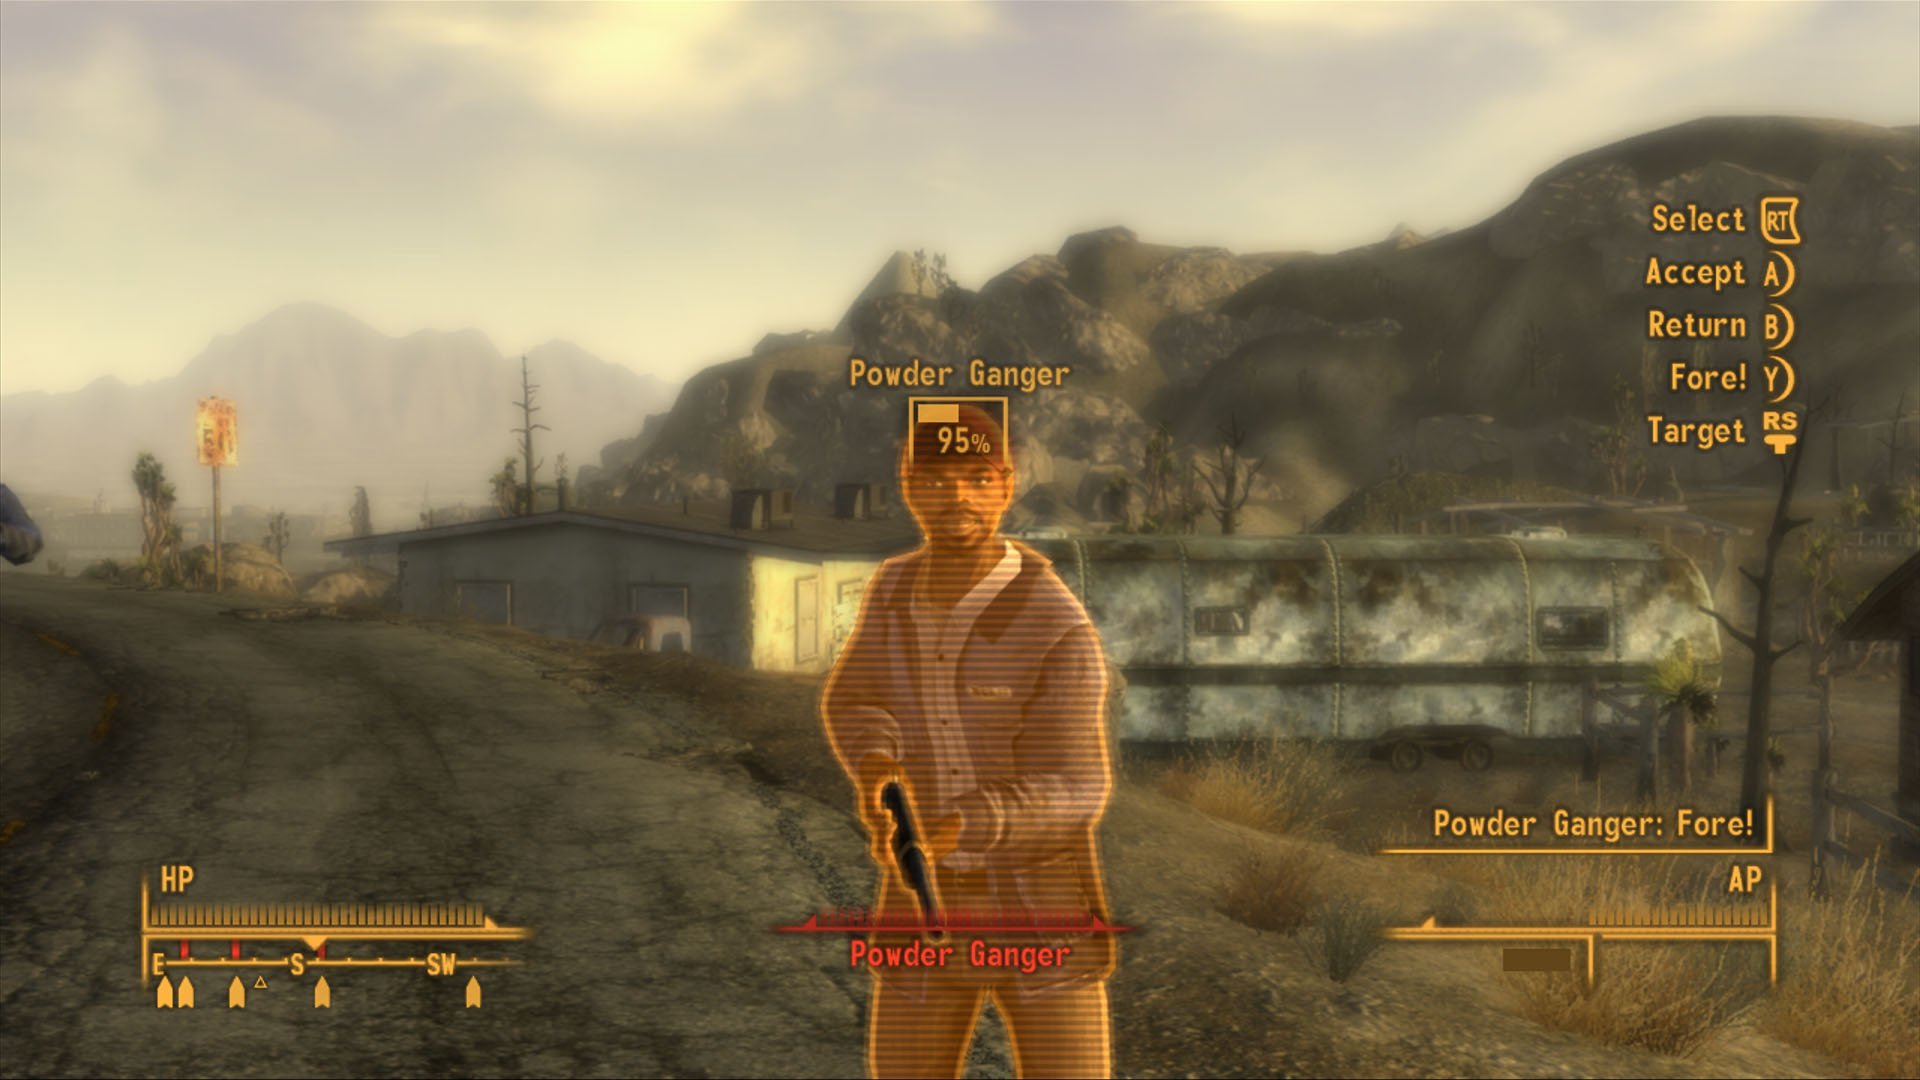 Fallout: New Vegas - Playstation 3